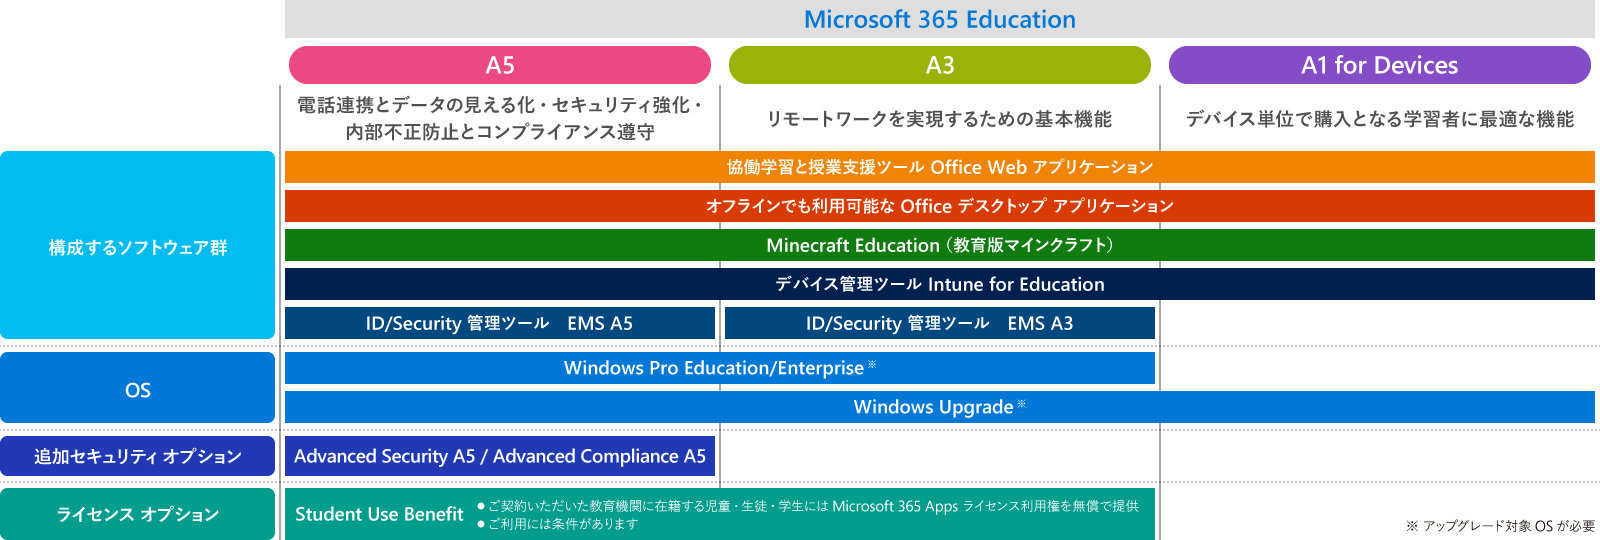 Microsoft 365 Education 図解